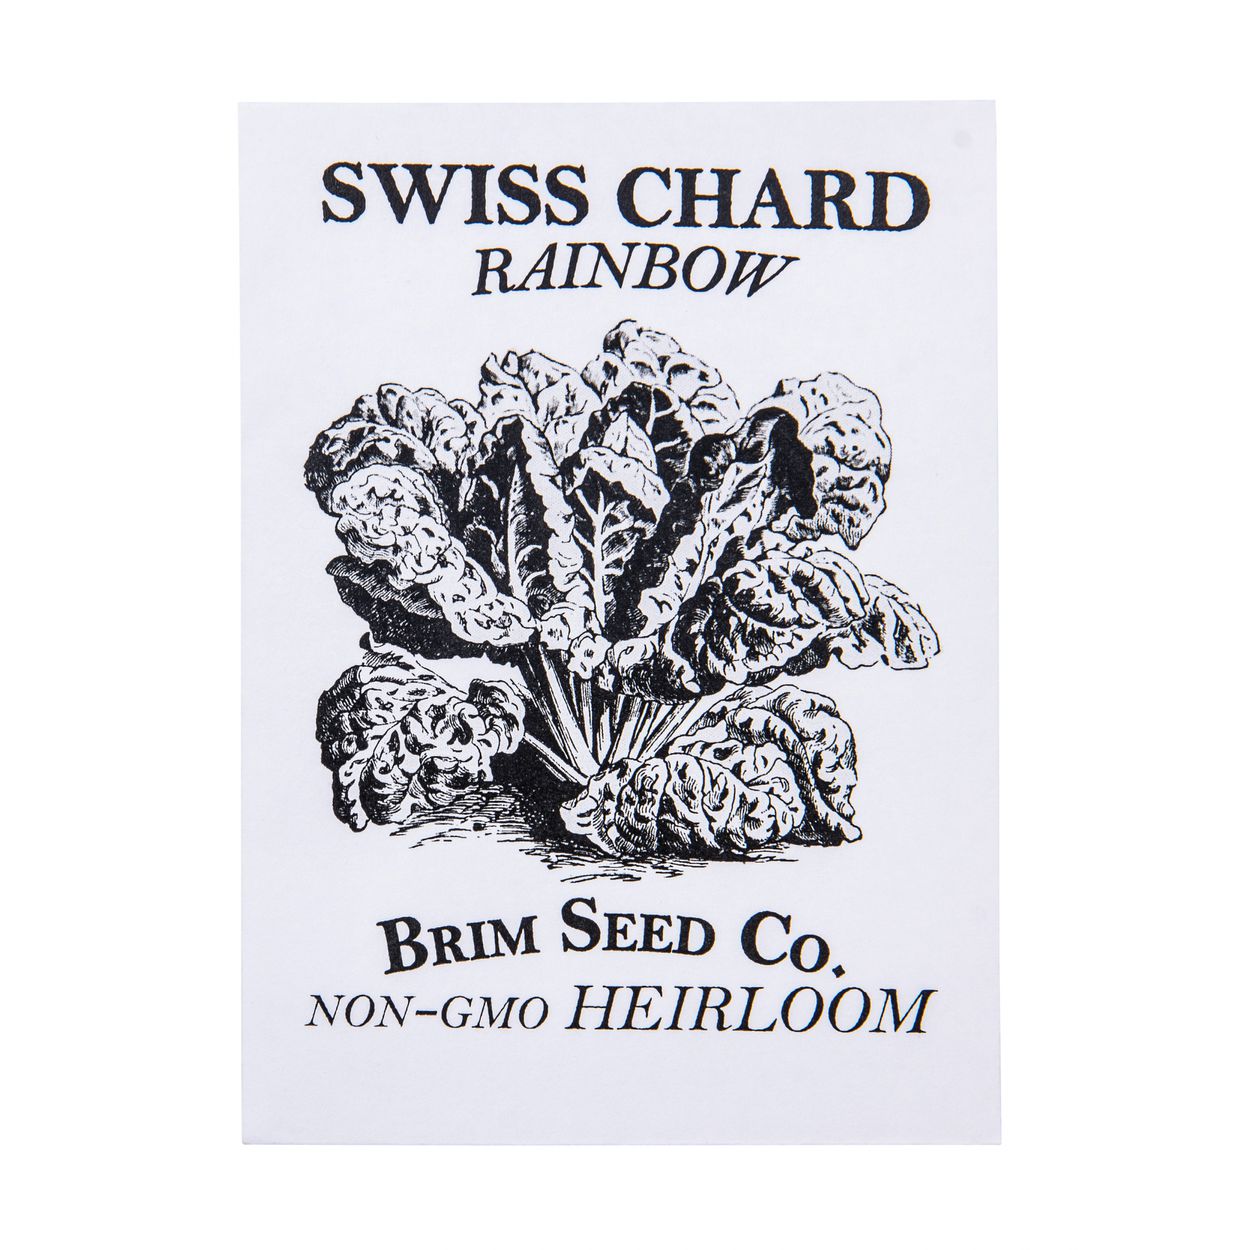 Brim Seed Co. - Rainbow Swiss Chard Heirloom Seed